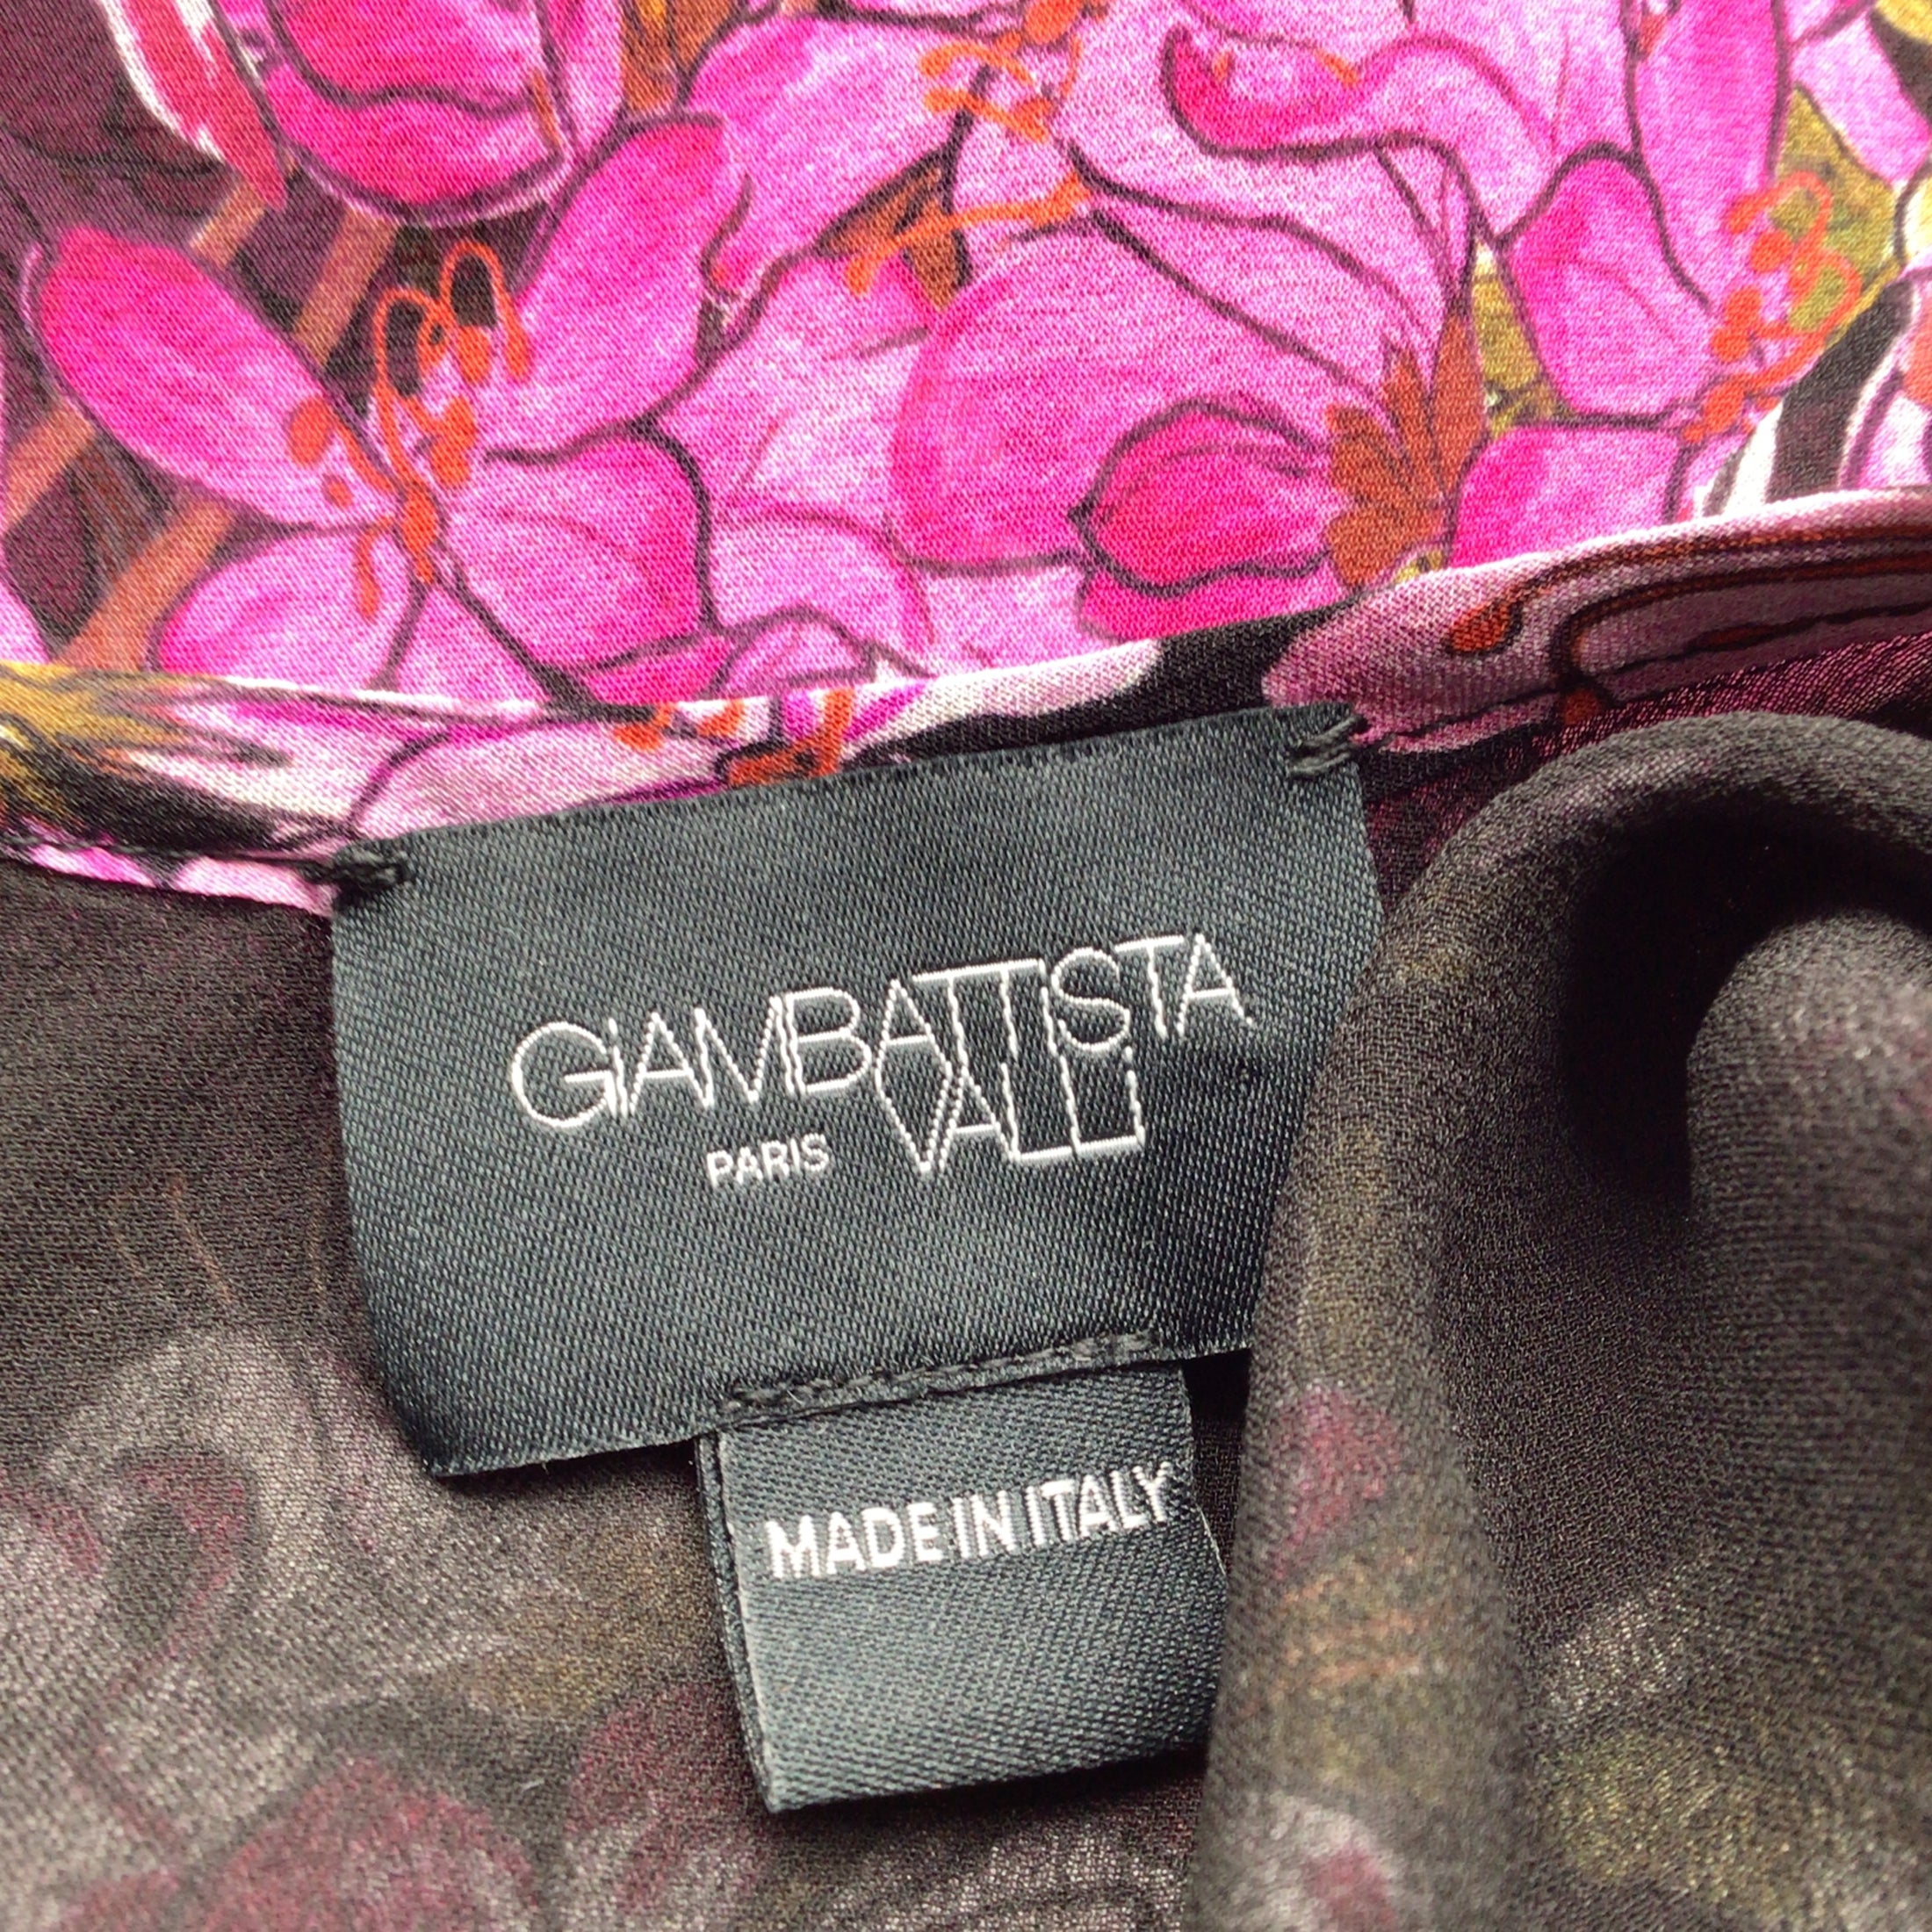 Giambattista Valli Black / Pink Floral Printed Silk Blouse